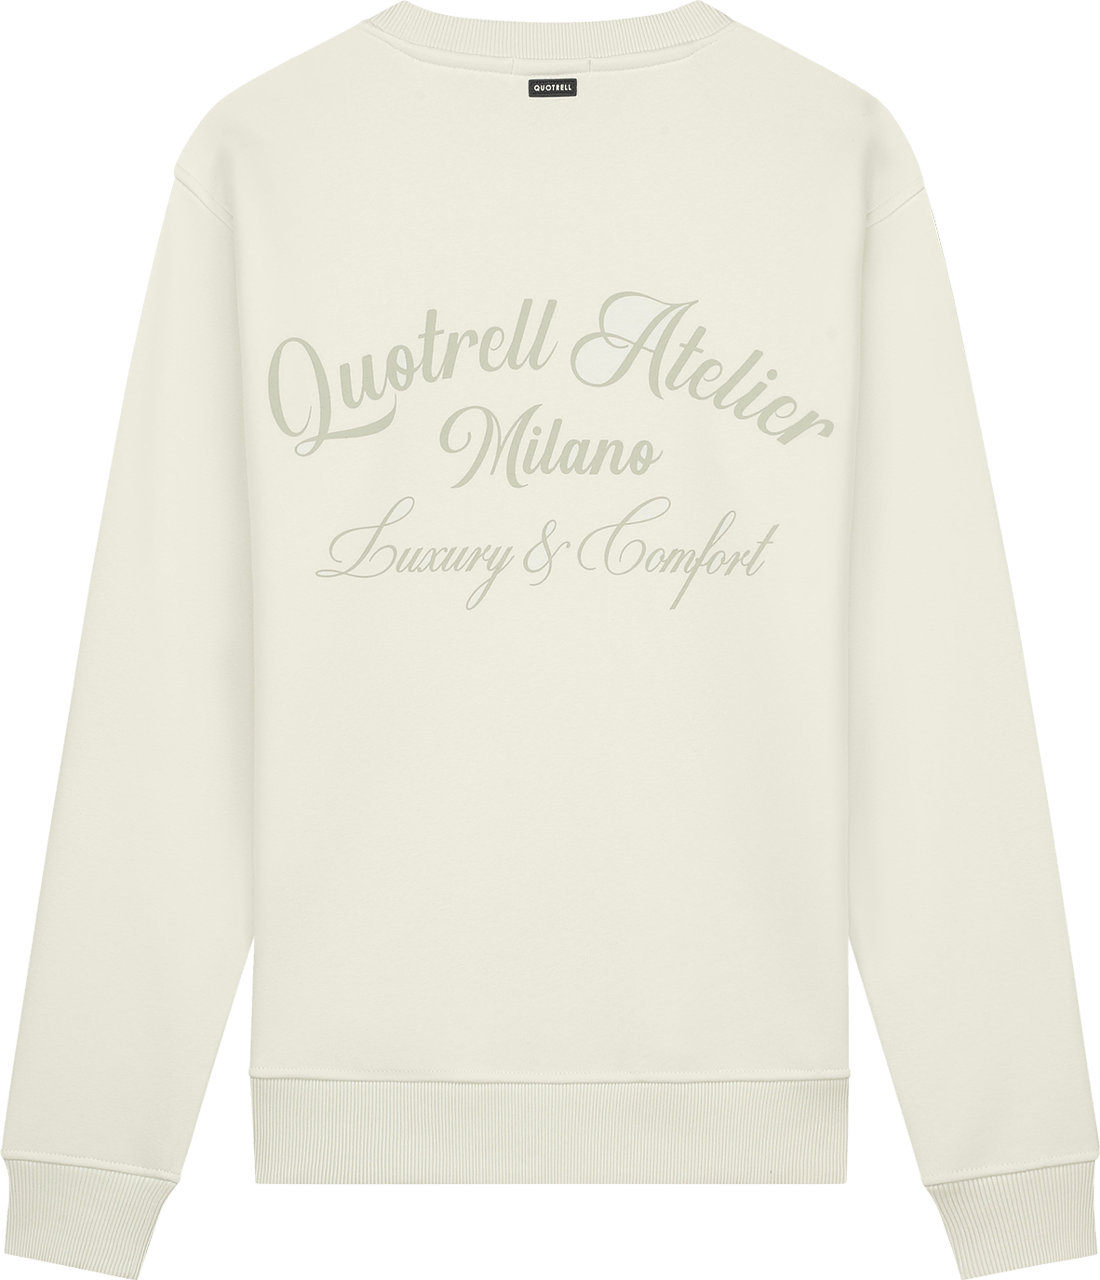 Quotrell Atelier Milano Crewneck | Off White/oat Wit